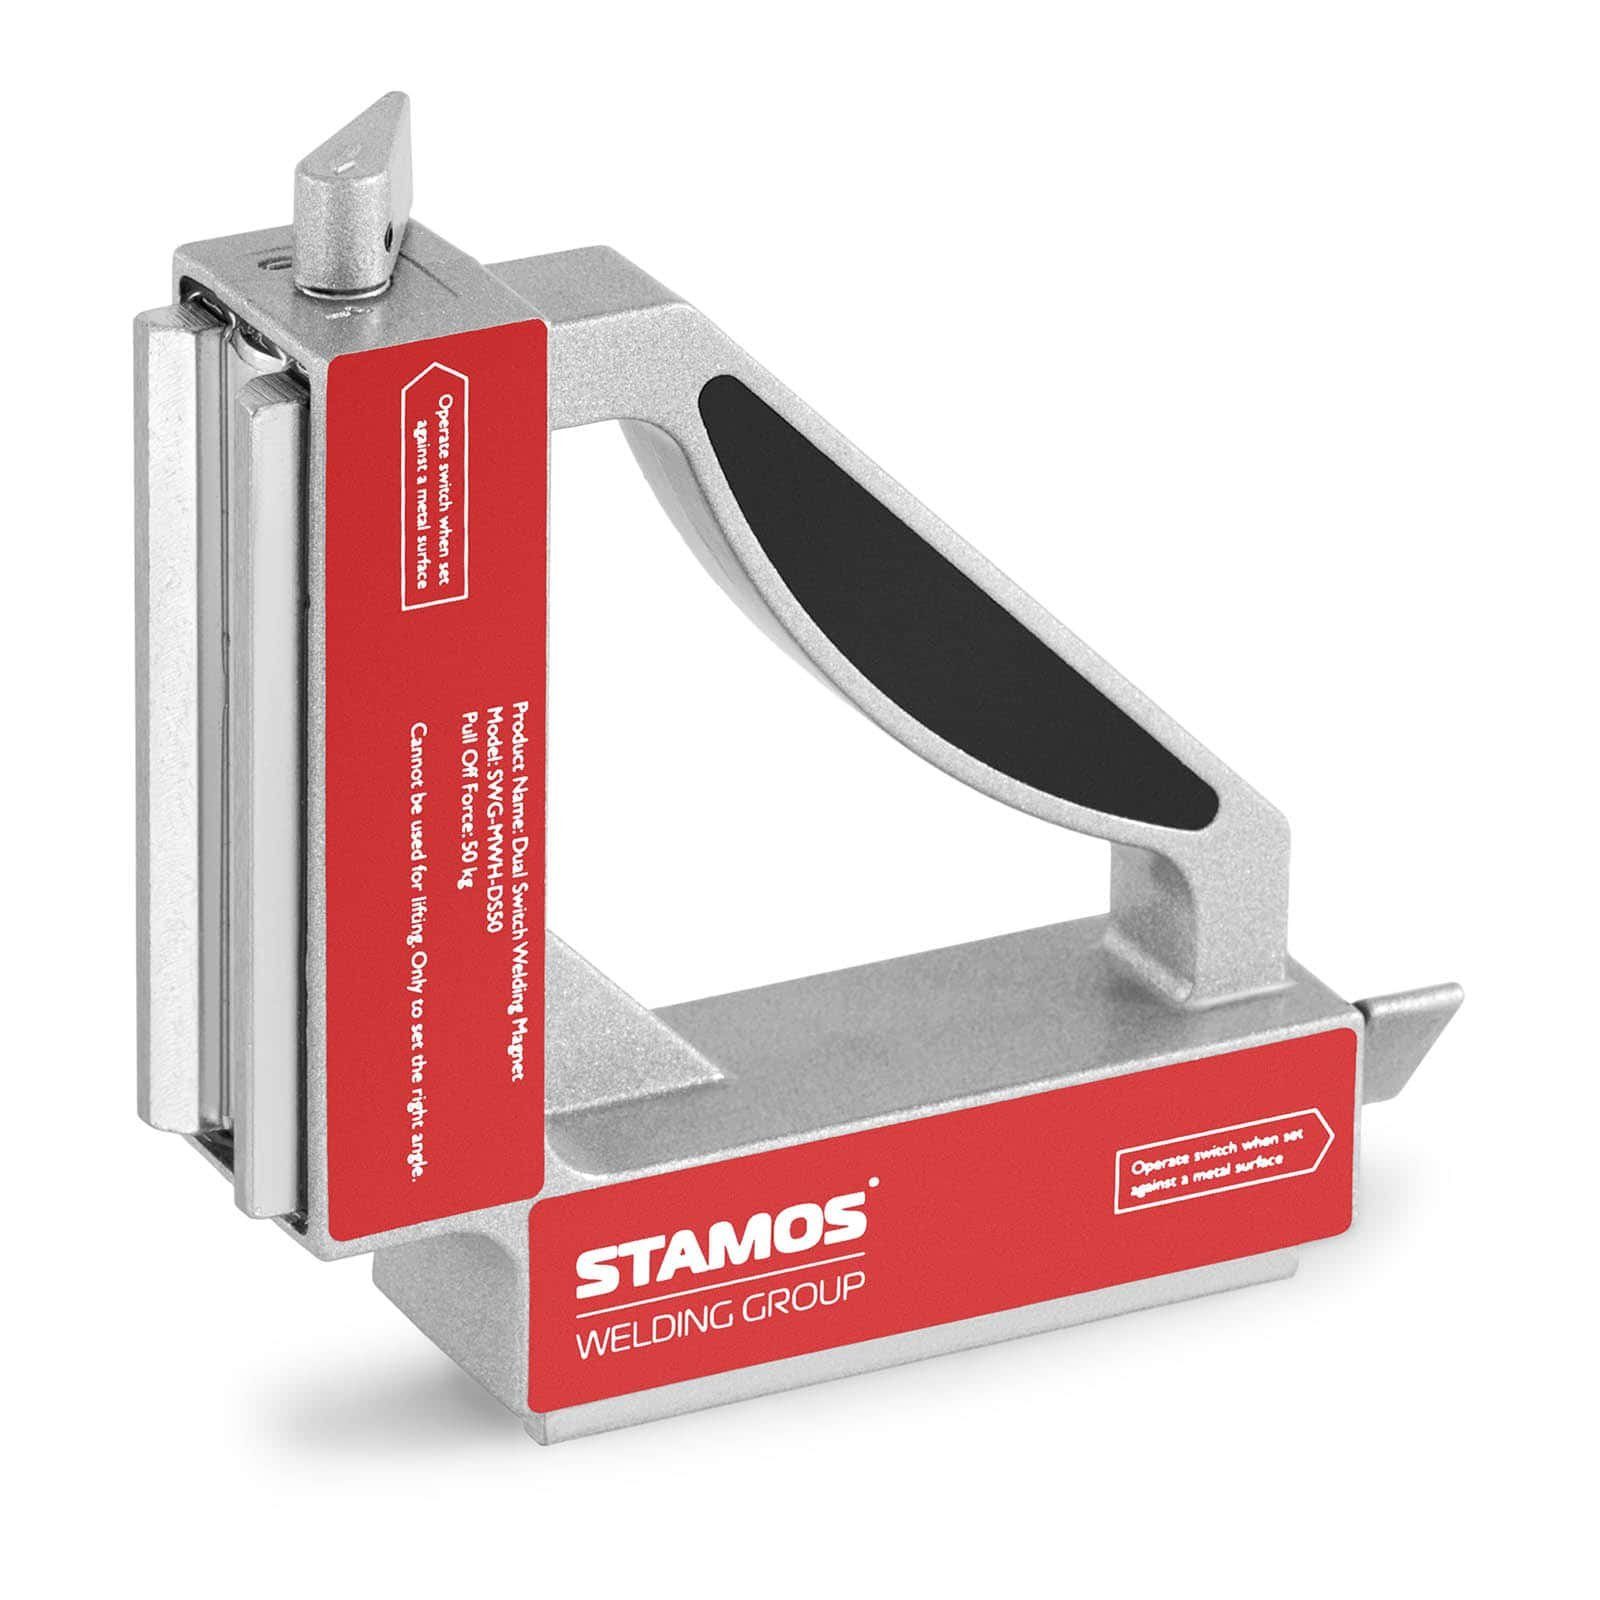 Stamos Welding Group Magnet-Schweißwinkel Magnetschweißwinkel Schweißmagnet Schweißwinkel Magnetwinkel 50 kg 90°